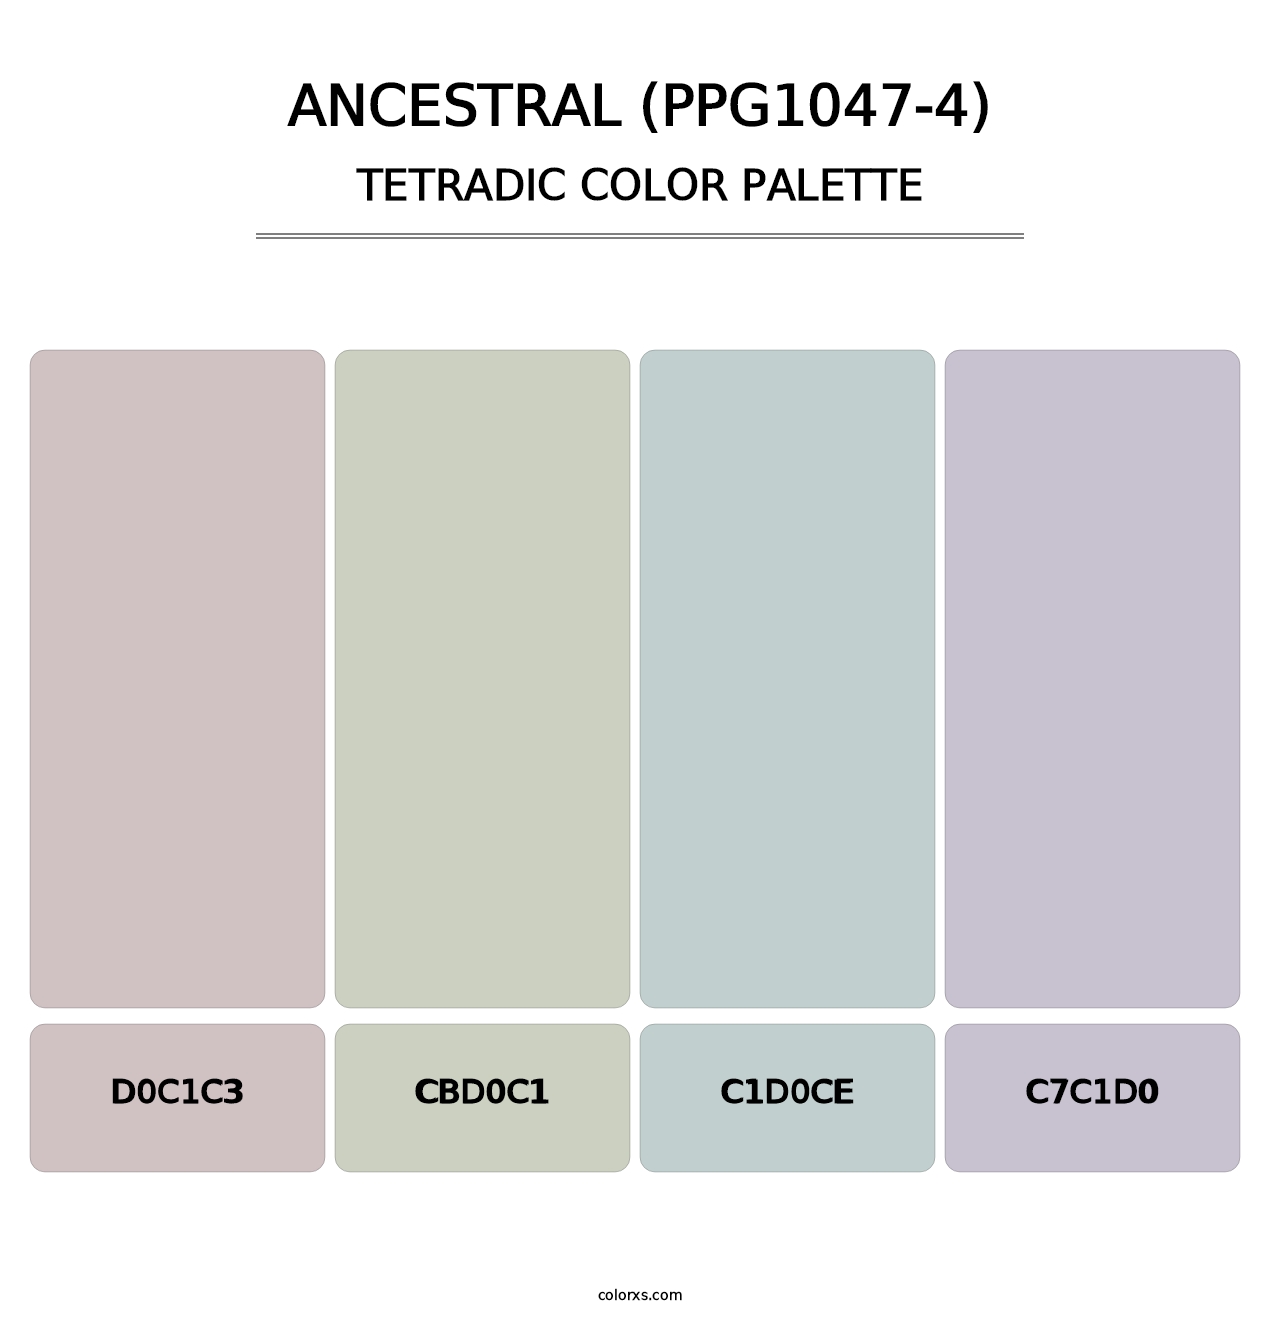 Ancestral (PPG1047-4) - Tetradic Color Palette